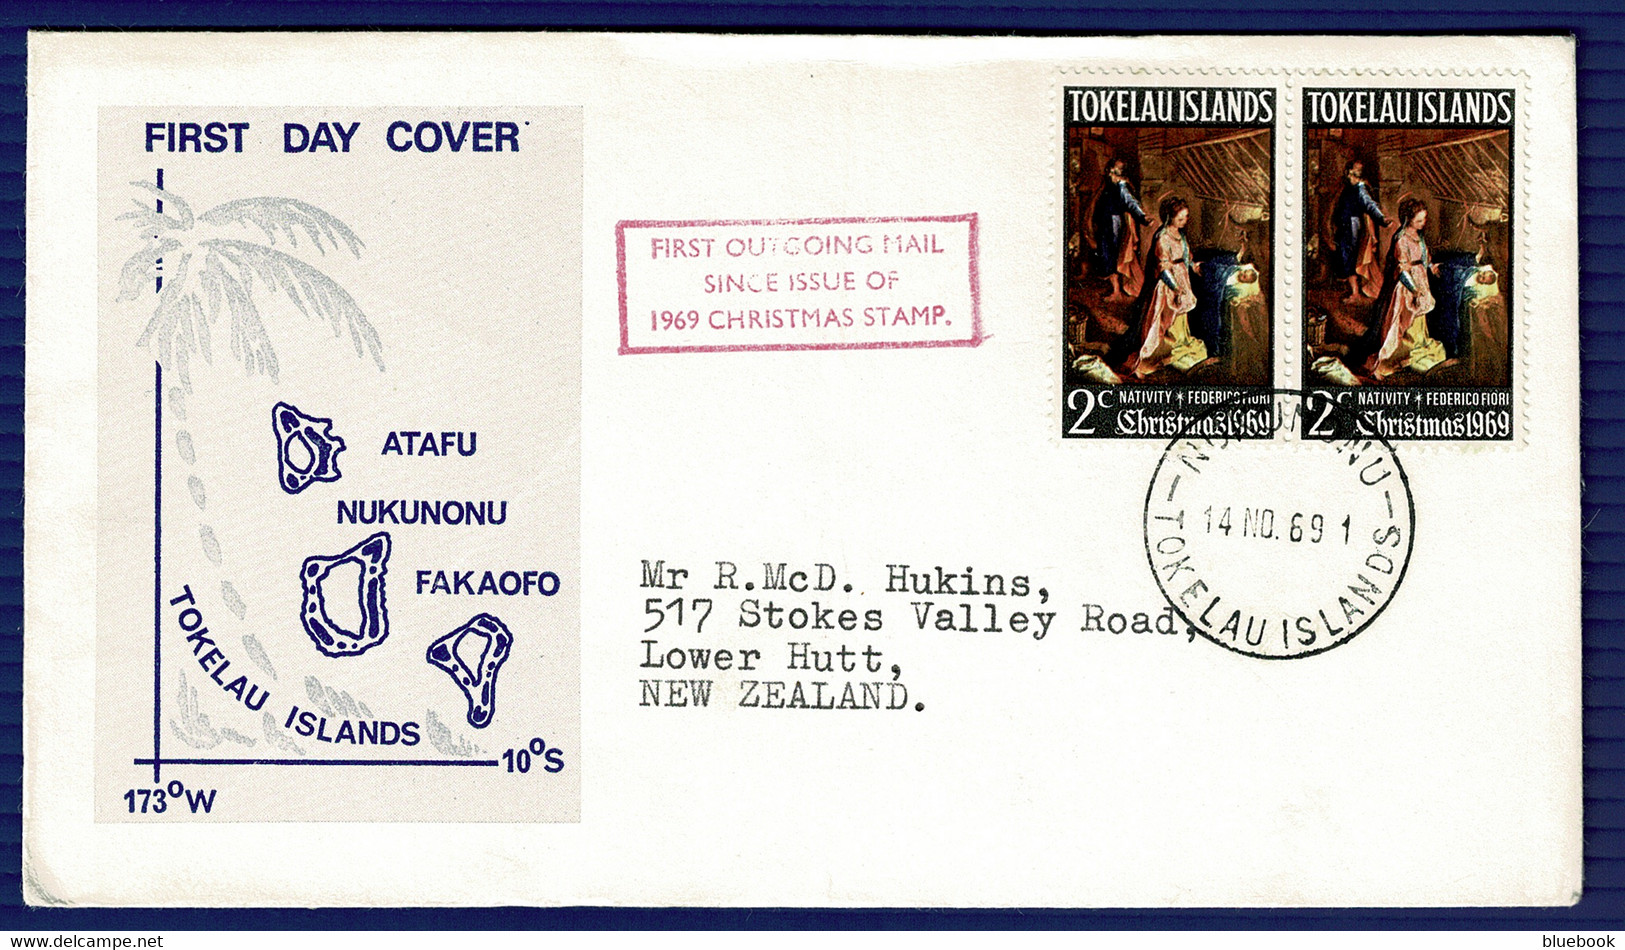 Ref 1550 - New Zealand - 1969 FDC First Day Cover - Tokelau Islands - Tokelau